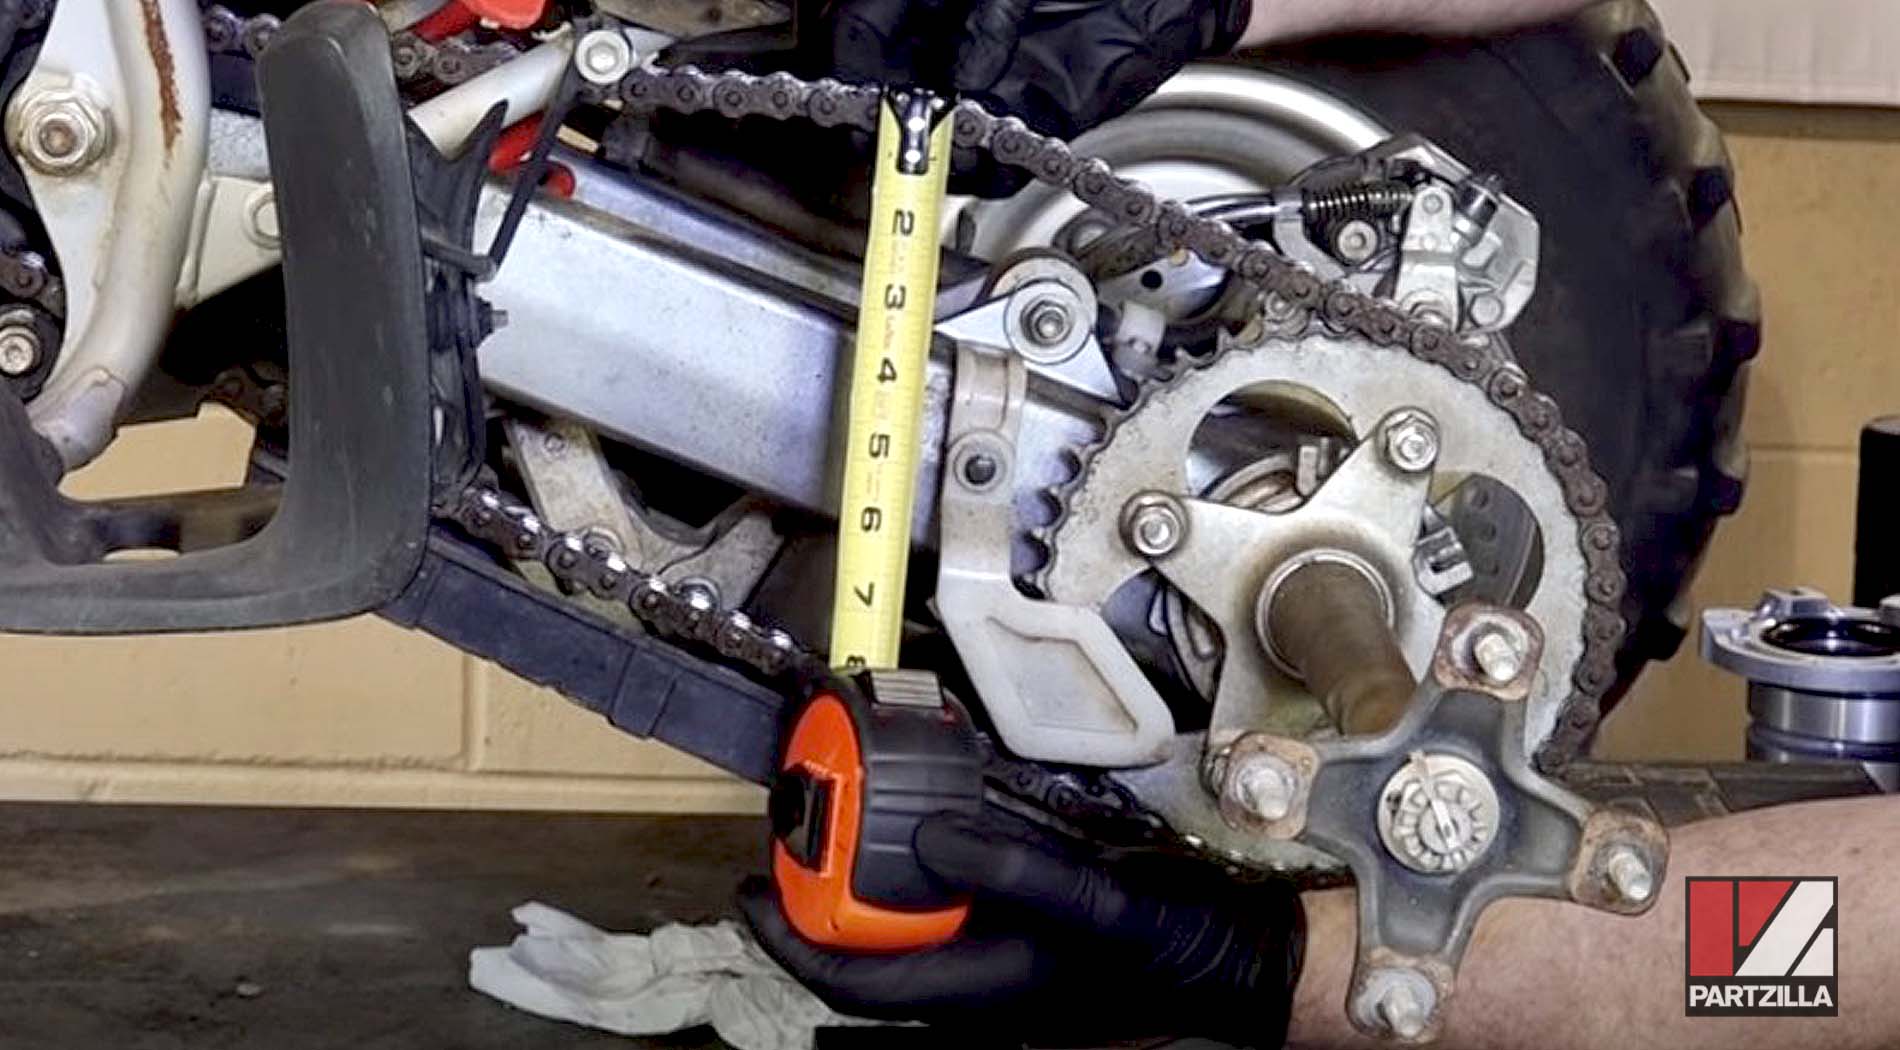 2007 Honda TRX 400 ATV chain adjustment and cleaning